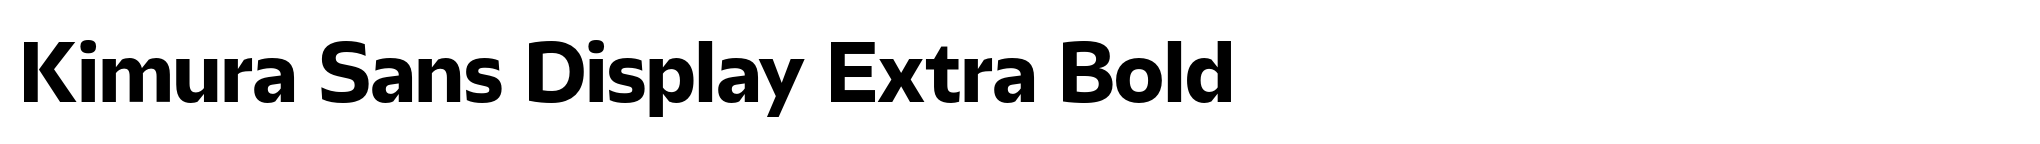 Kimura Sans Display Extra Bold image